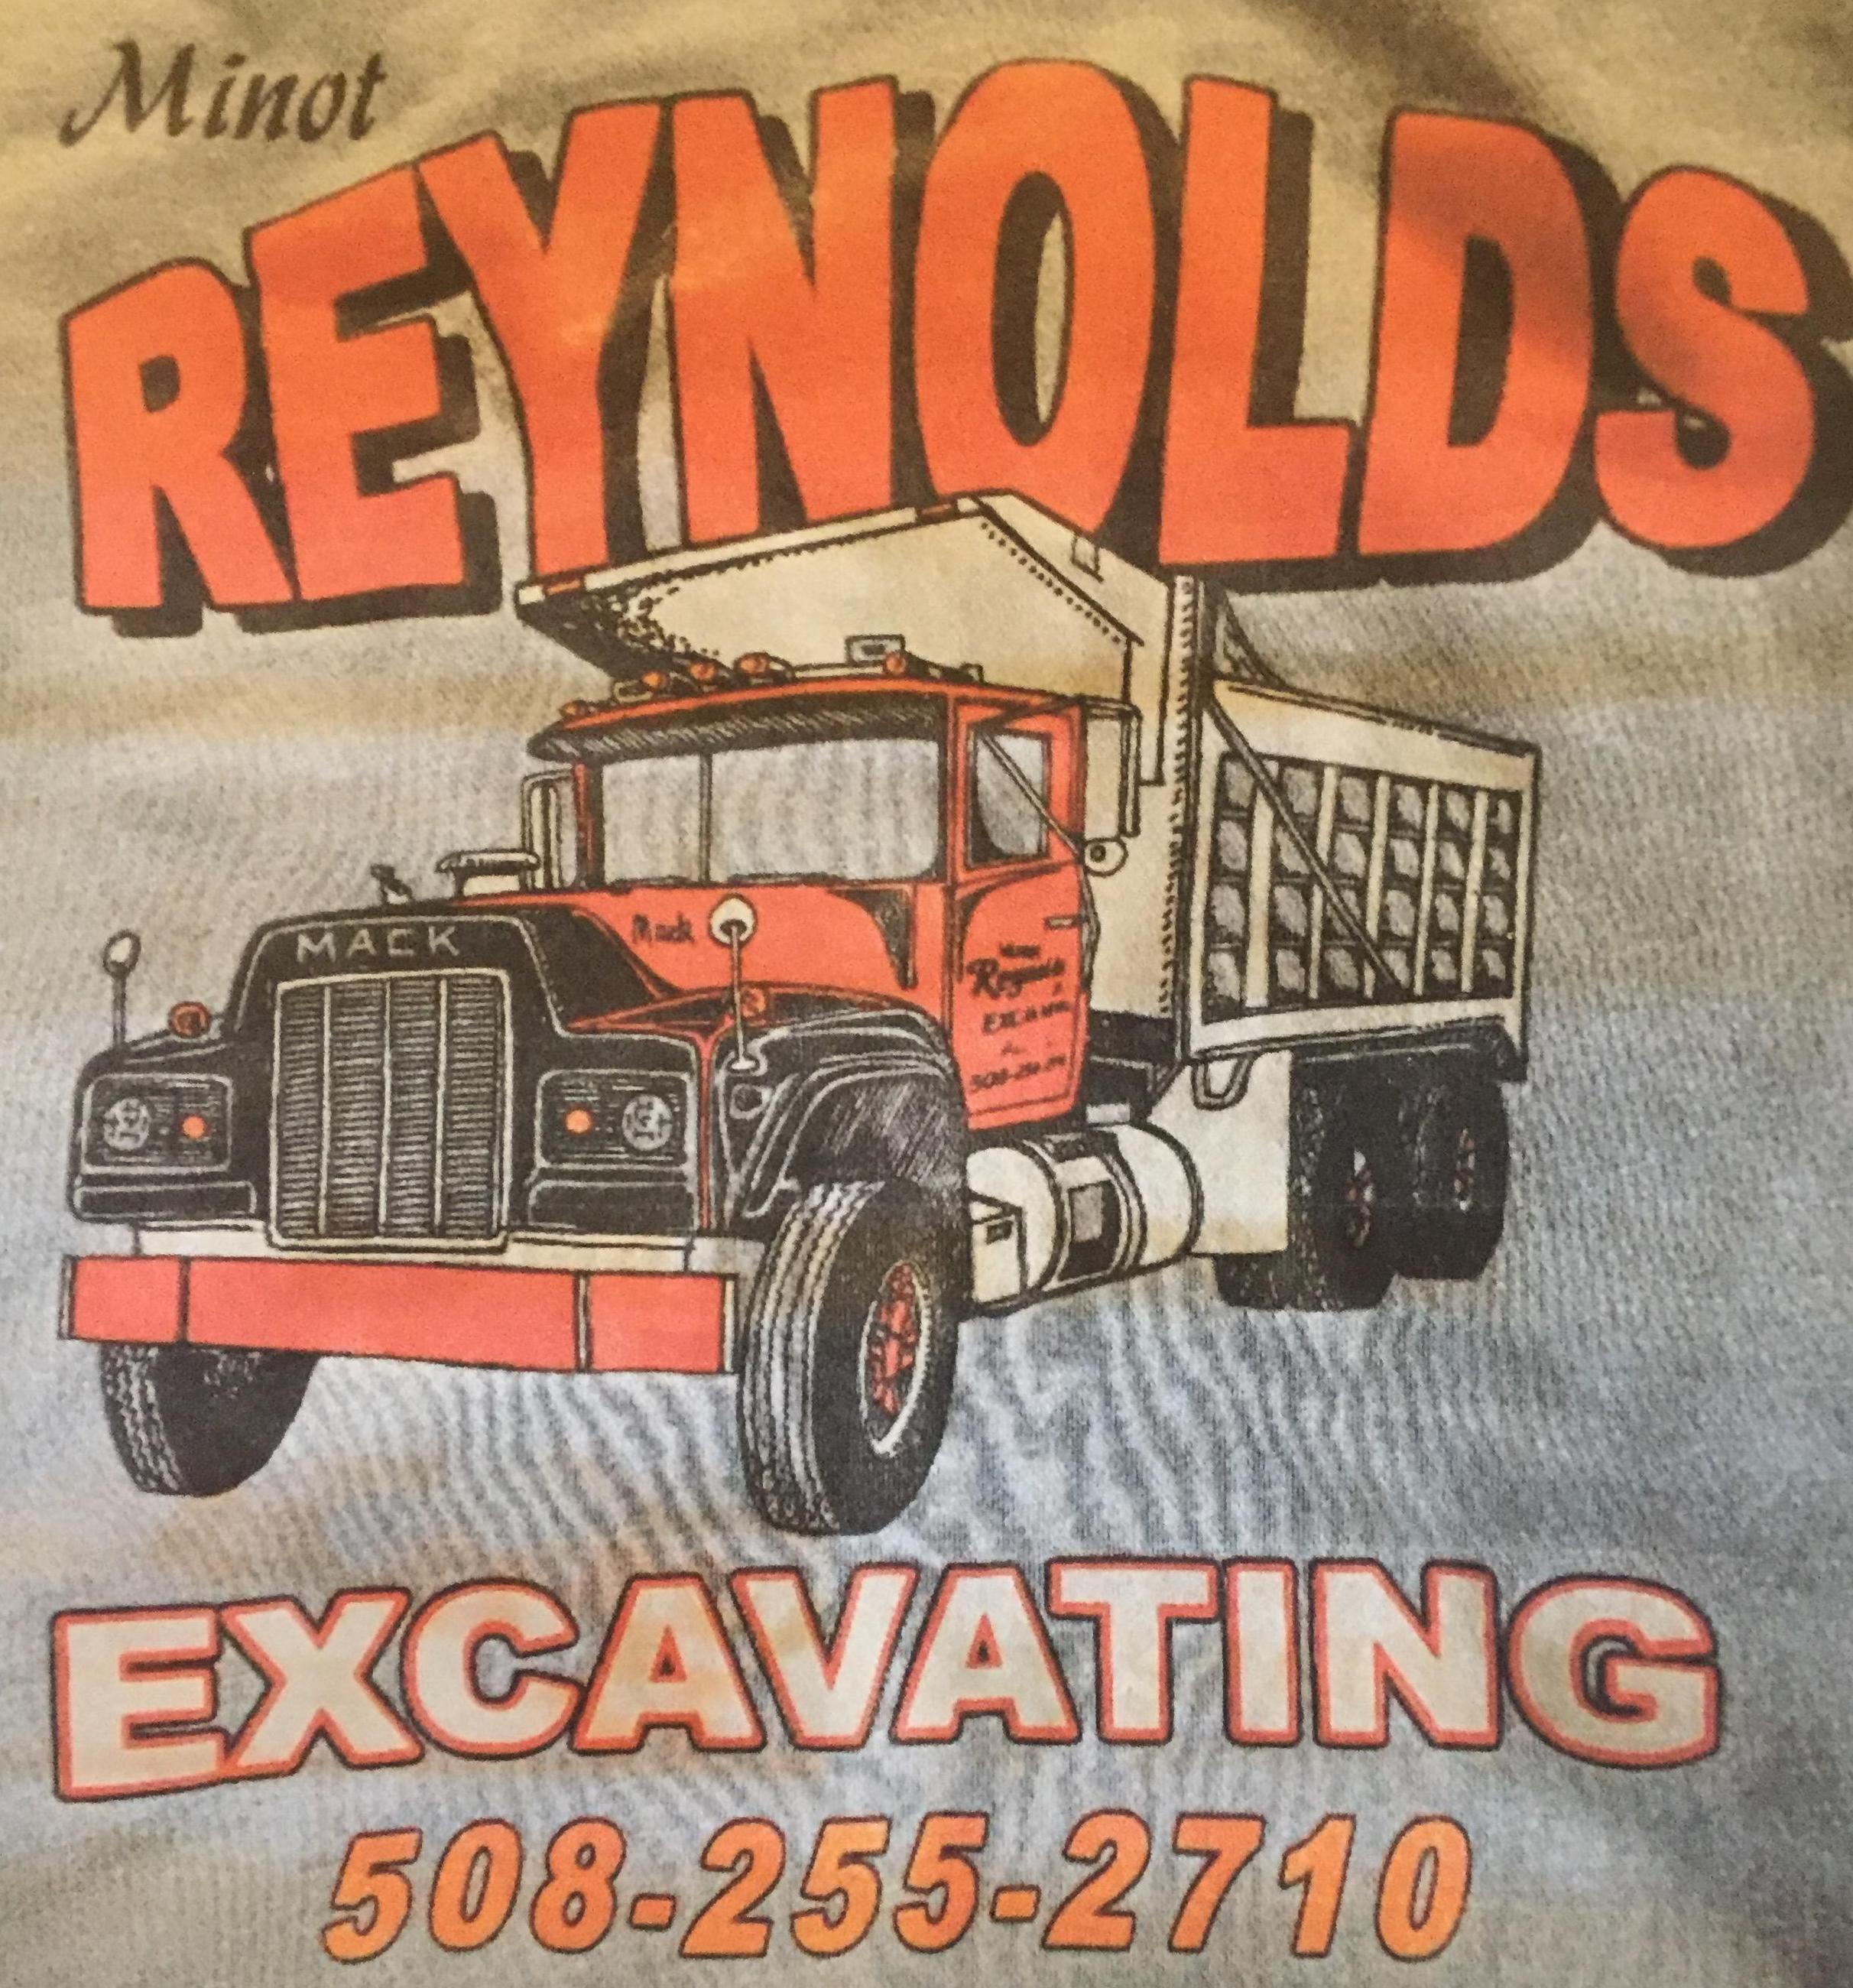 Minot Reynolds Excavating